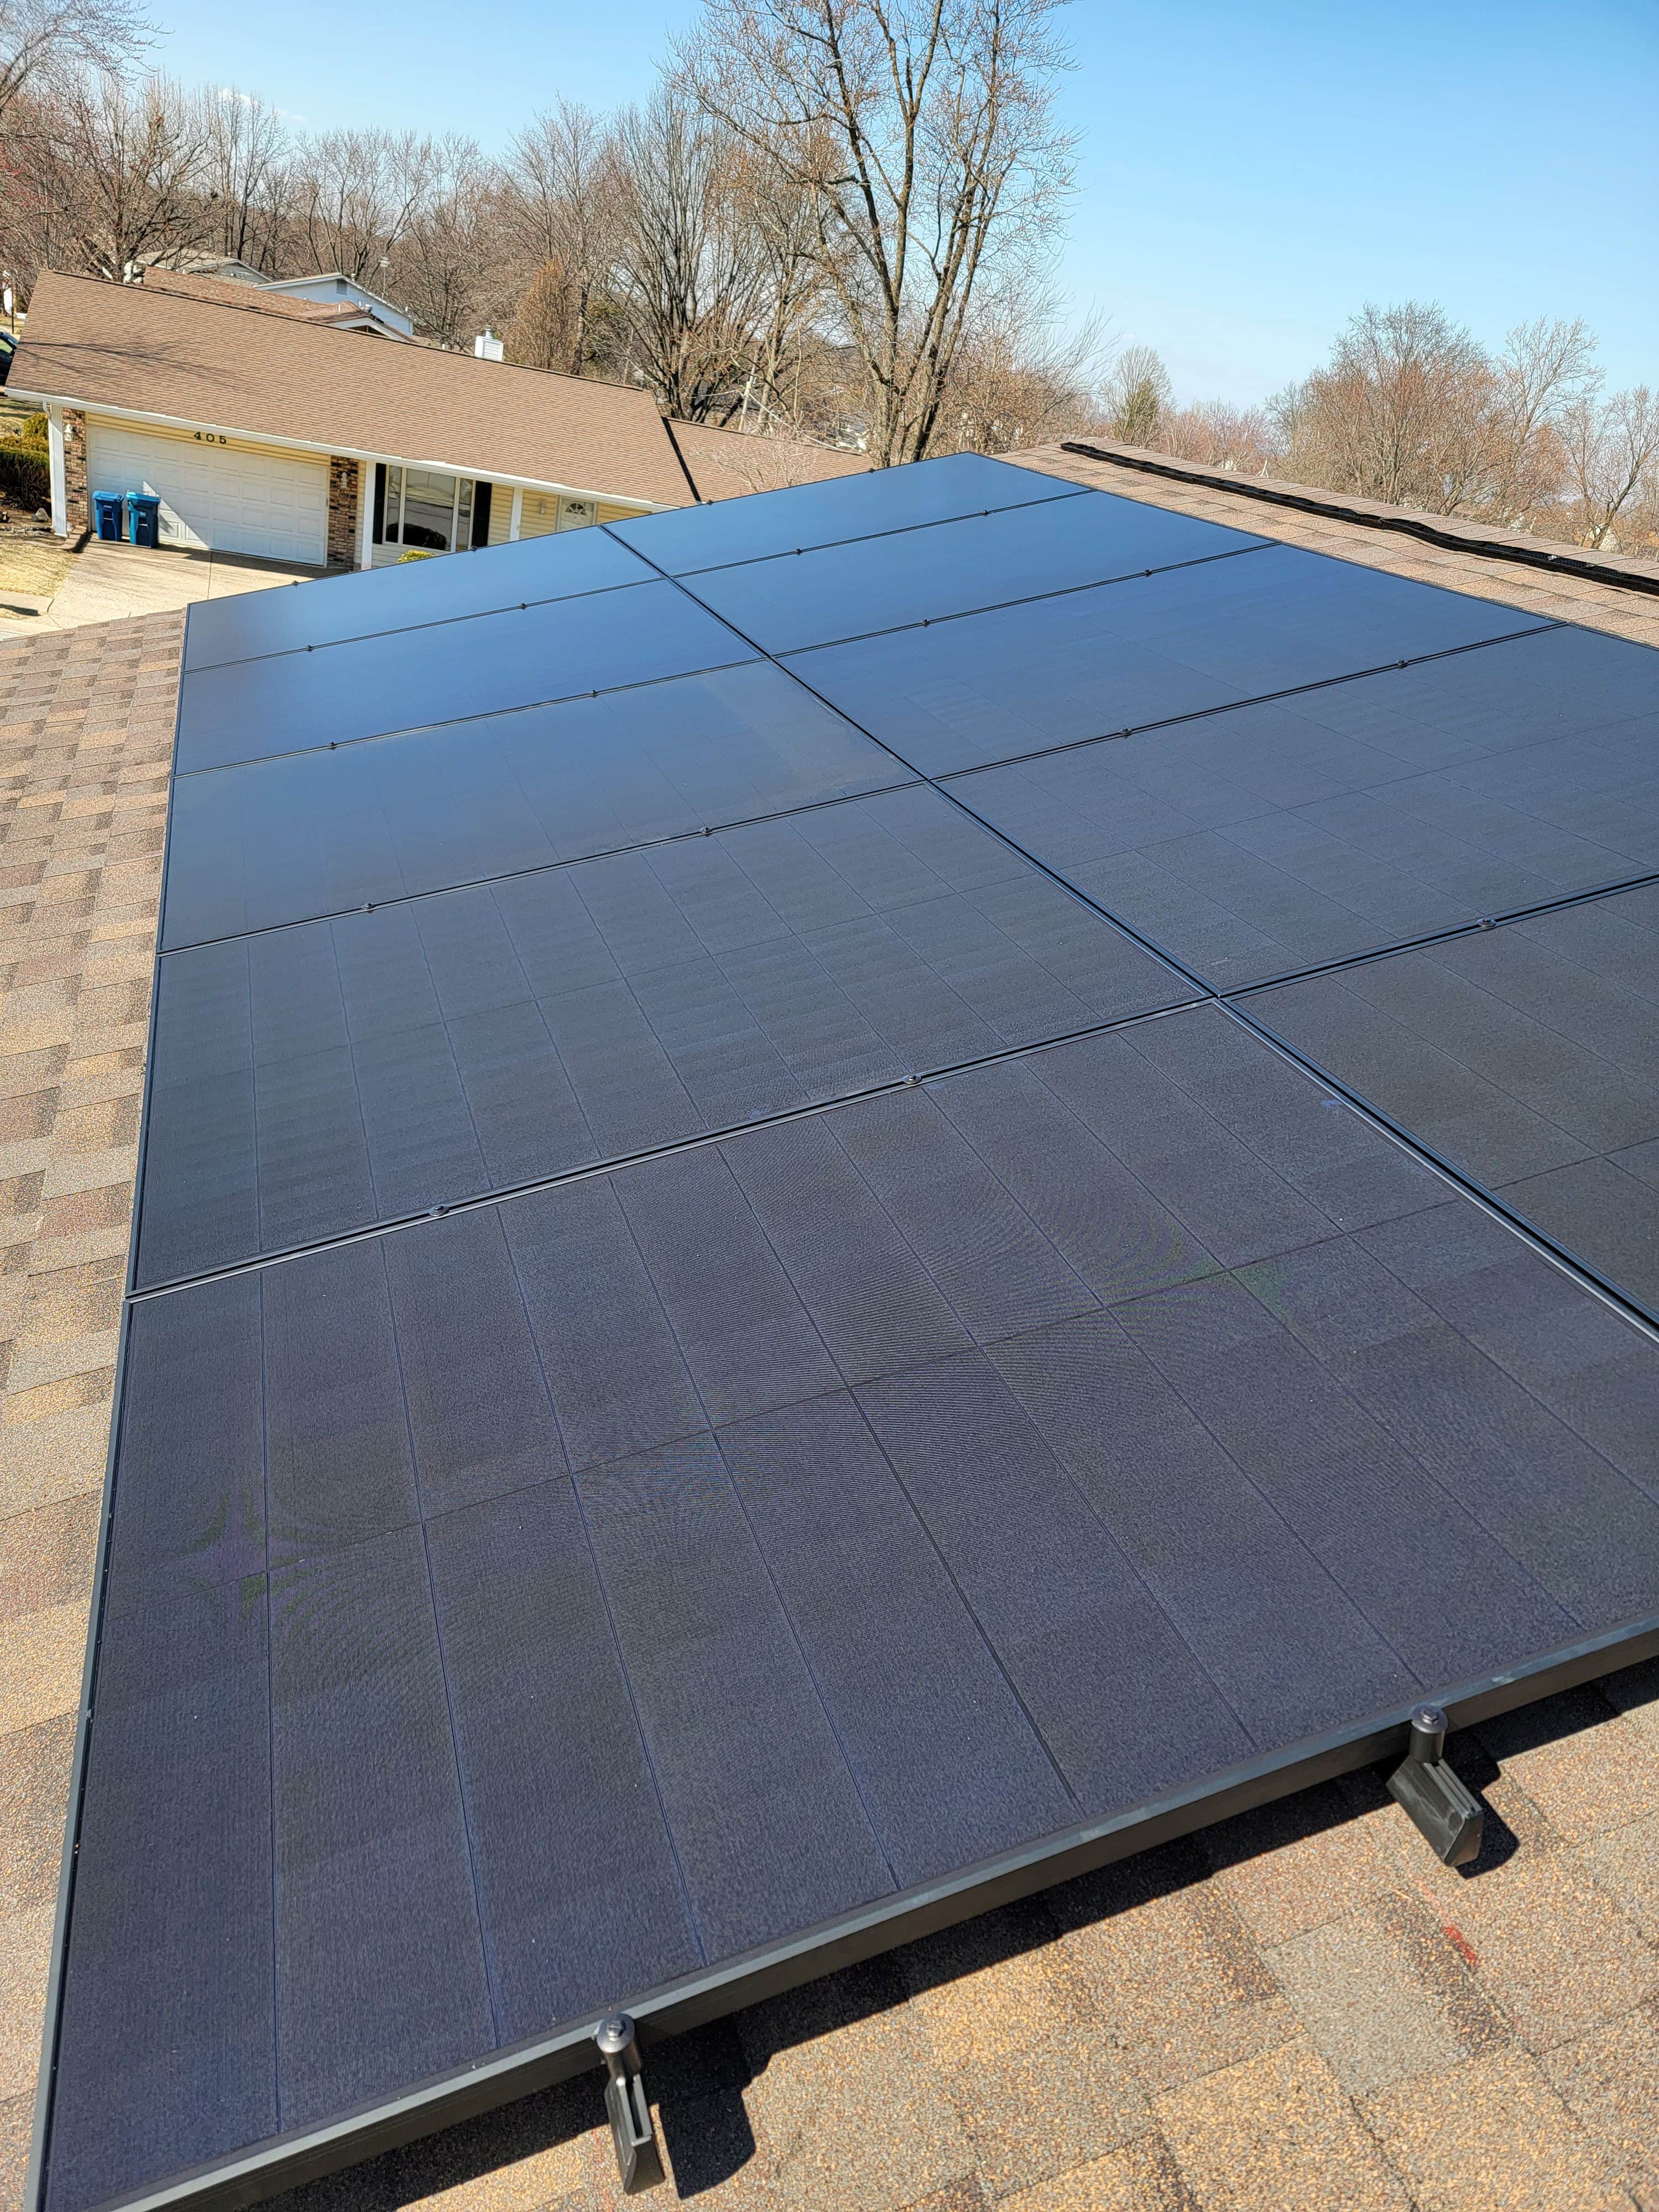 Solar city stl - St Charles, MO, US, solar installation